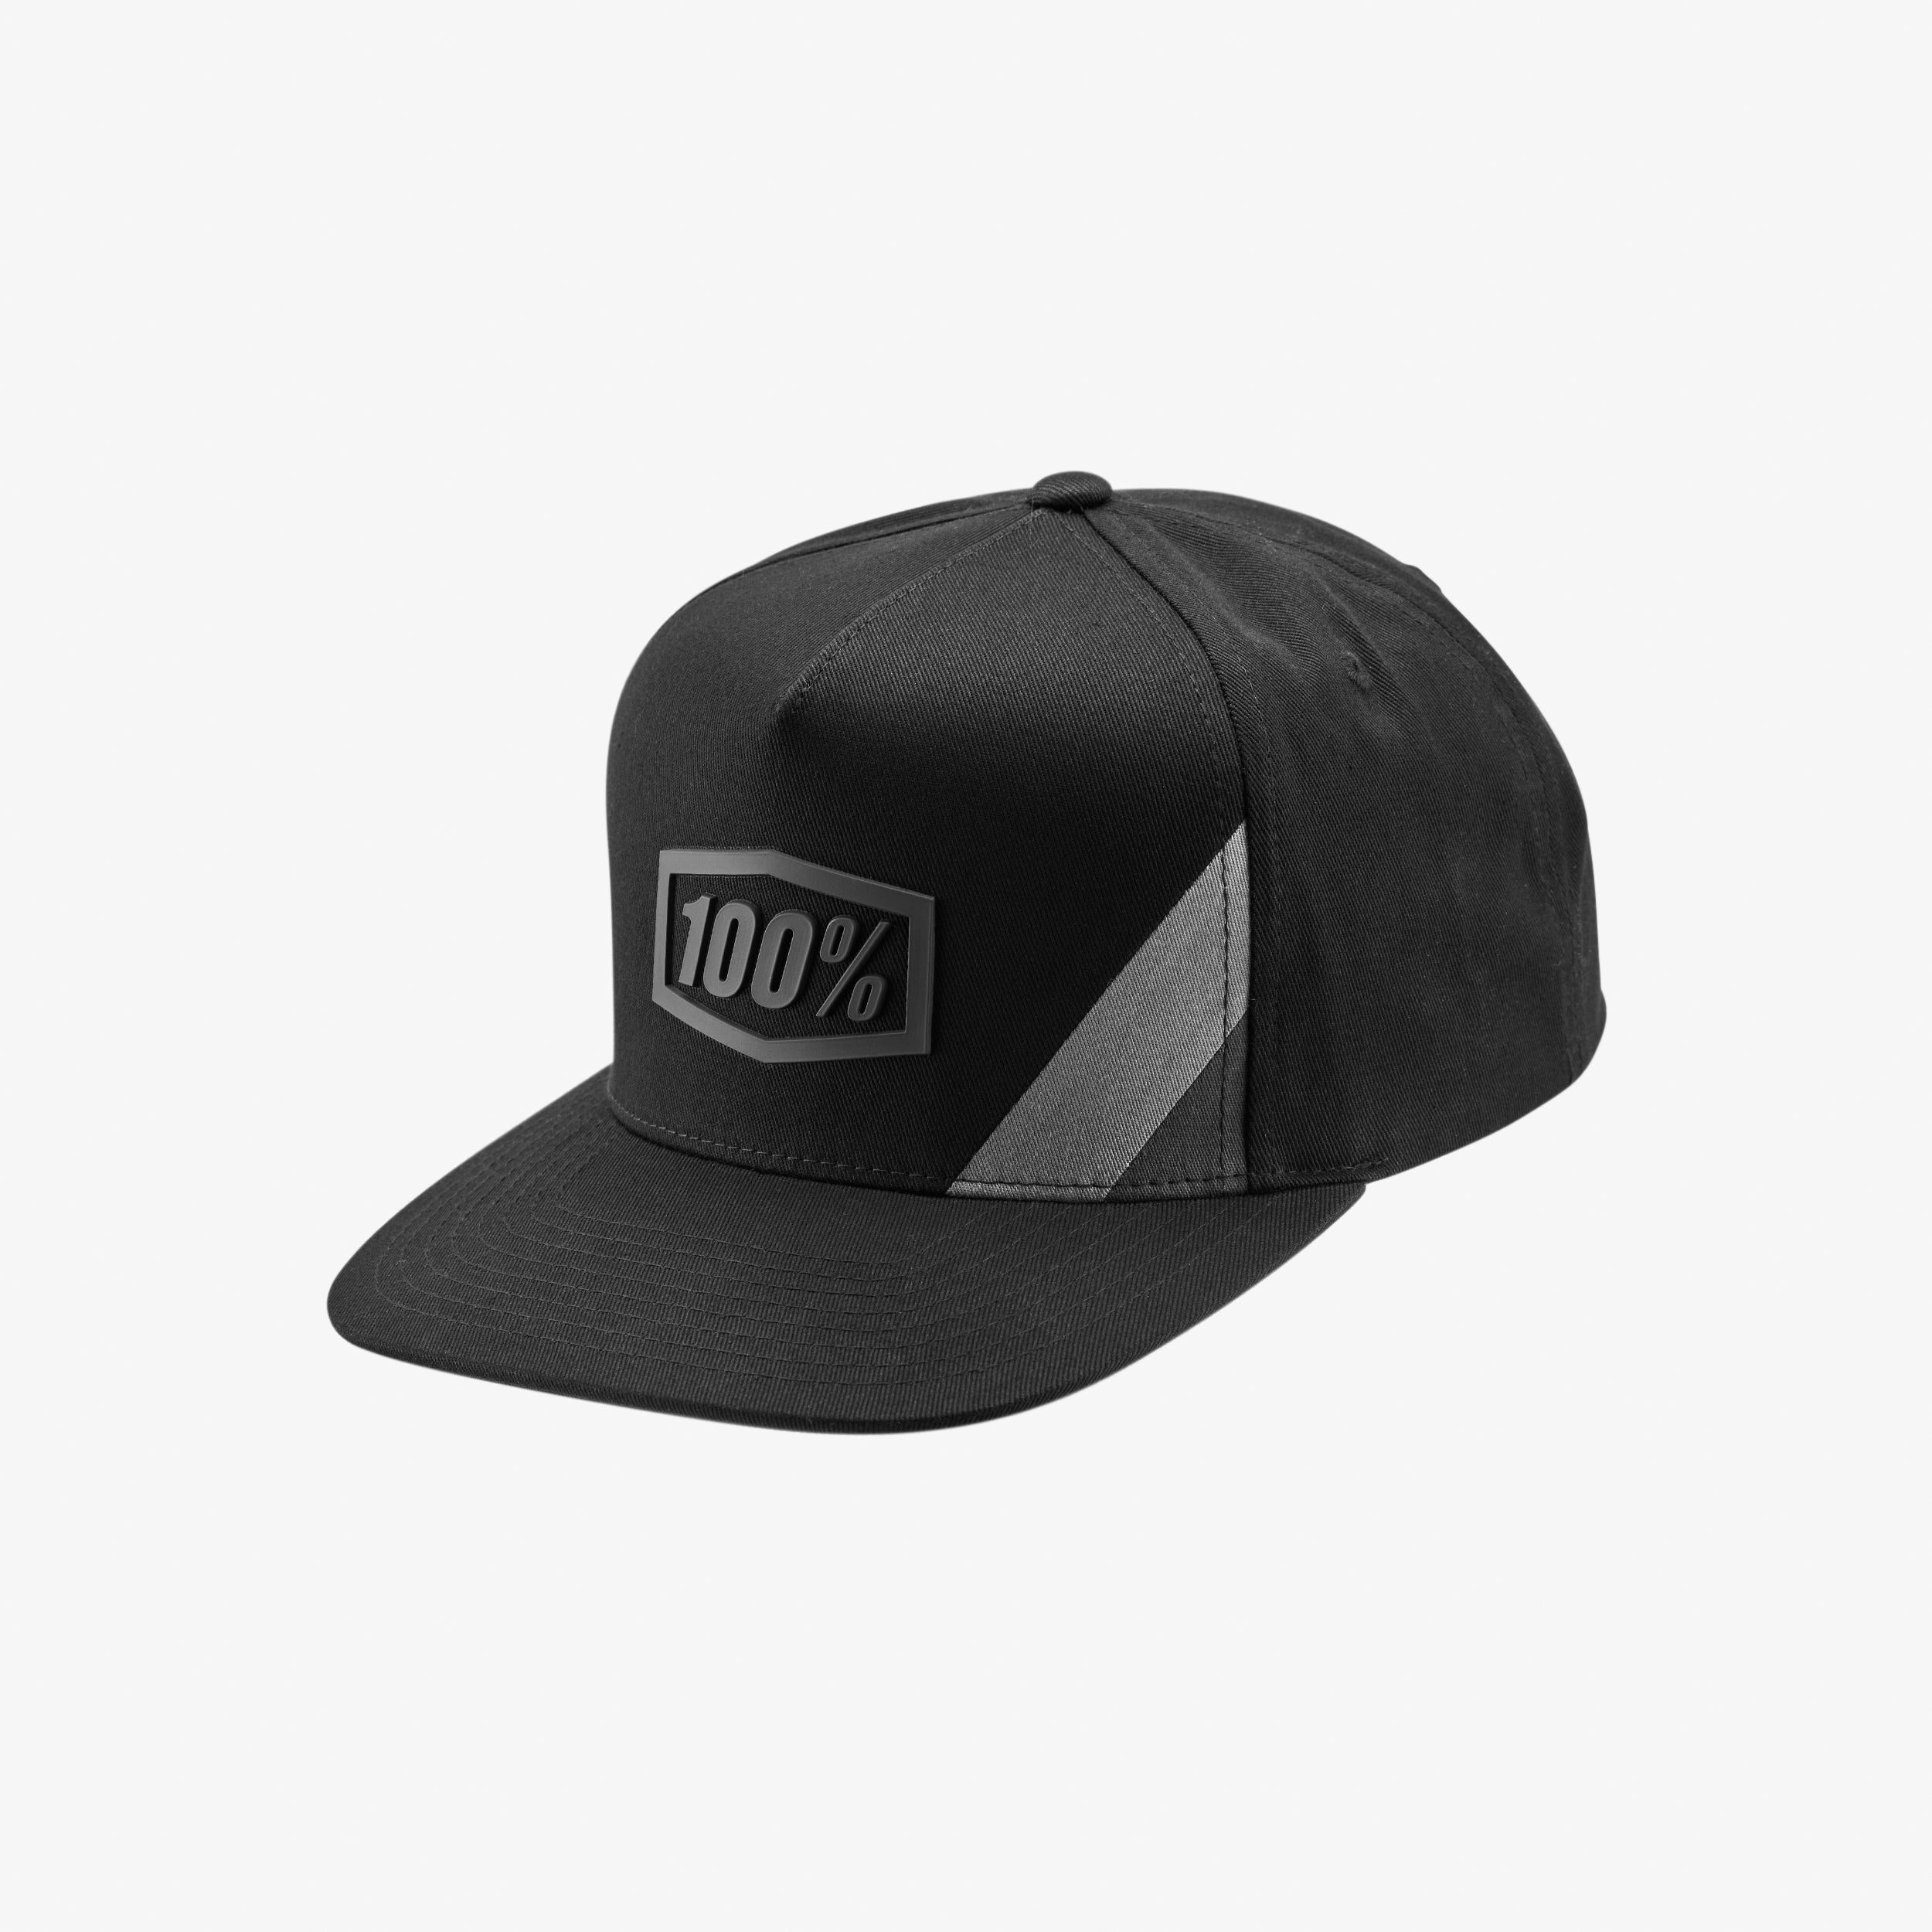 CORNERSTONE Trucker Hat Black/Grey